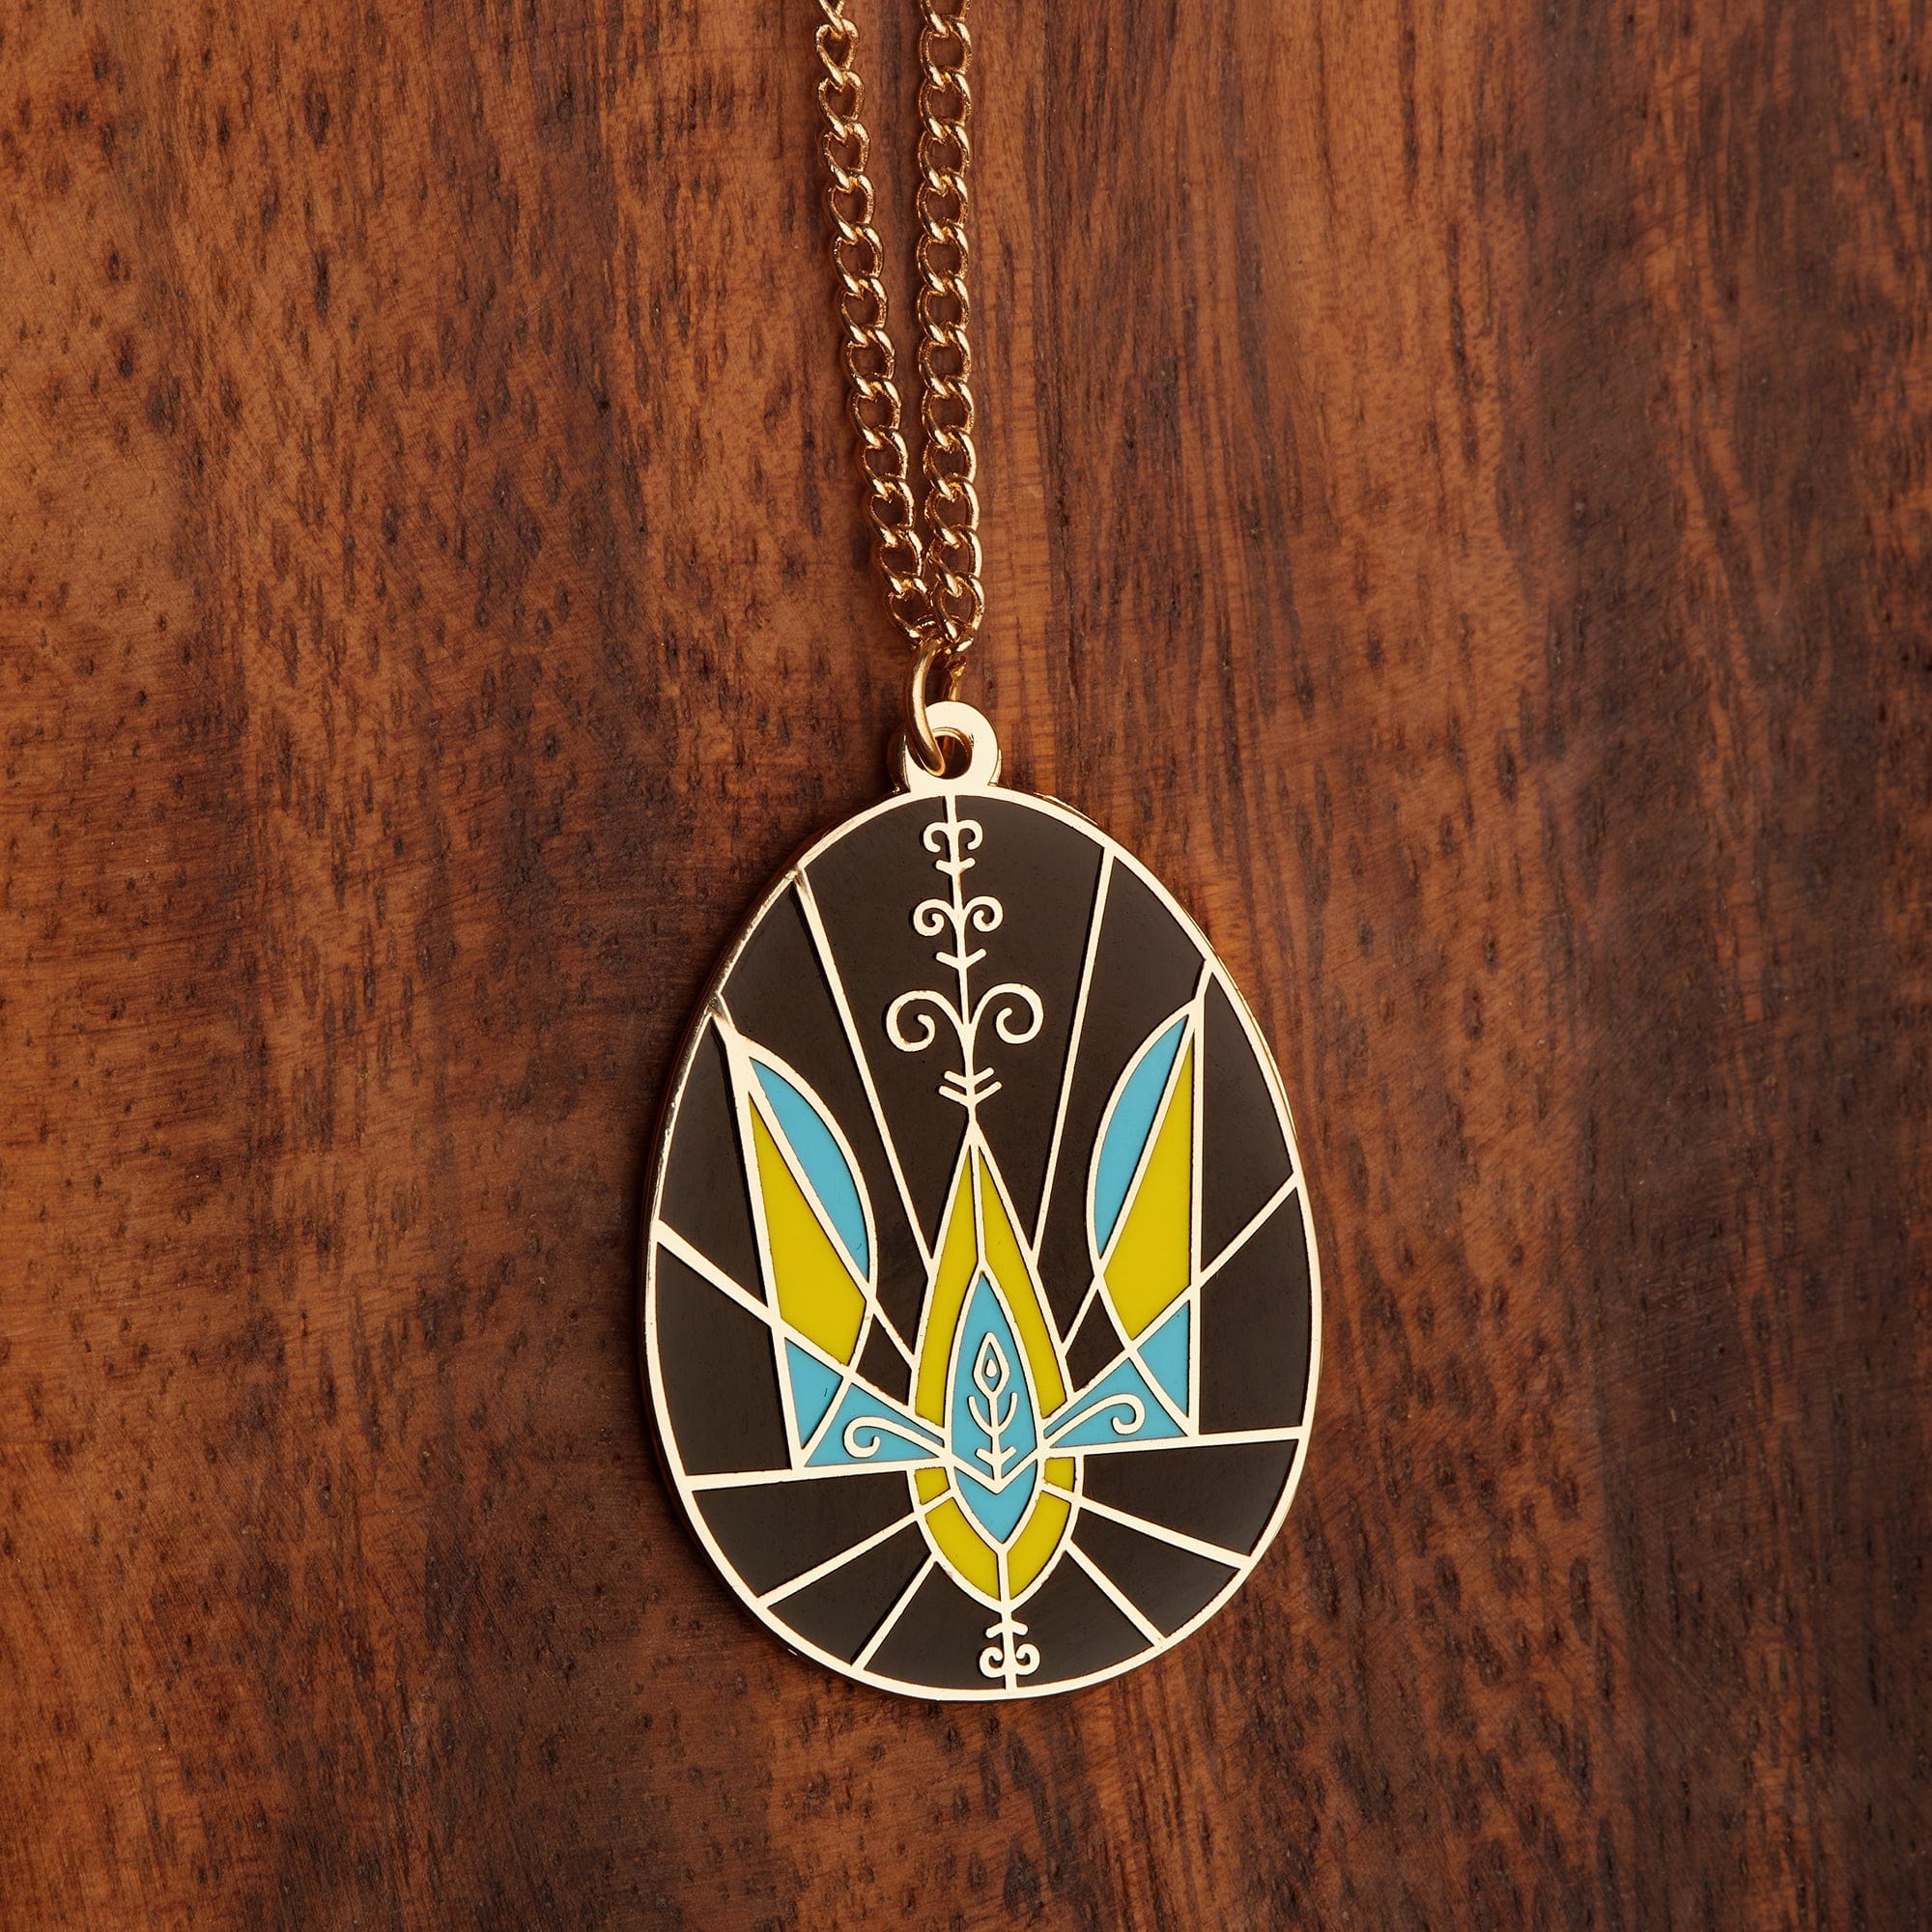 Ukrainian Easter Egg (Pysanka) Necklace - Trident